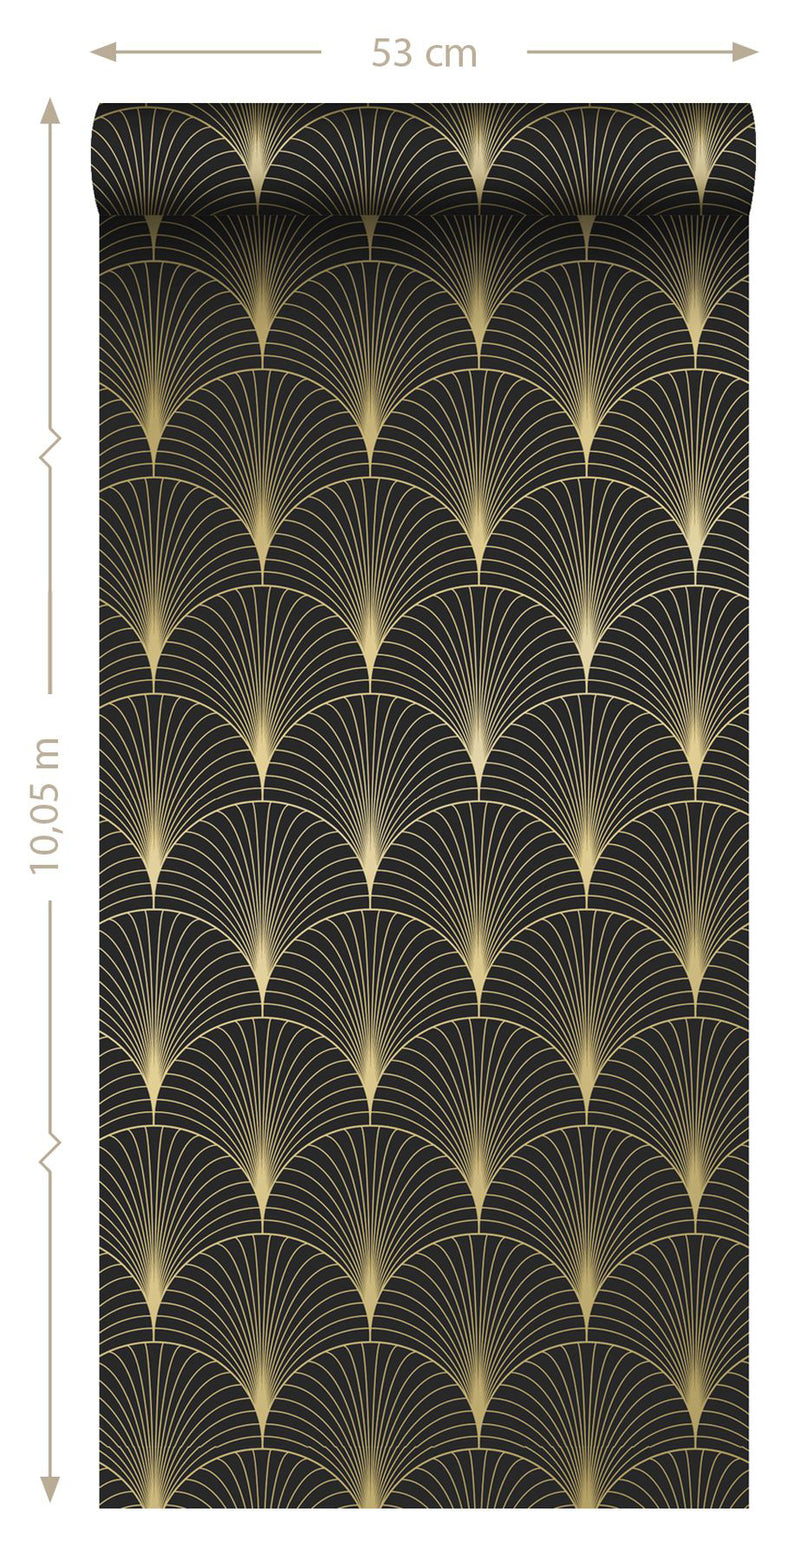 media image for Lempicka Black Art Deco Motif Wallpaper from Design Department by Brewster 247